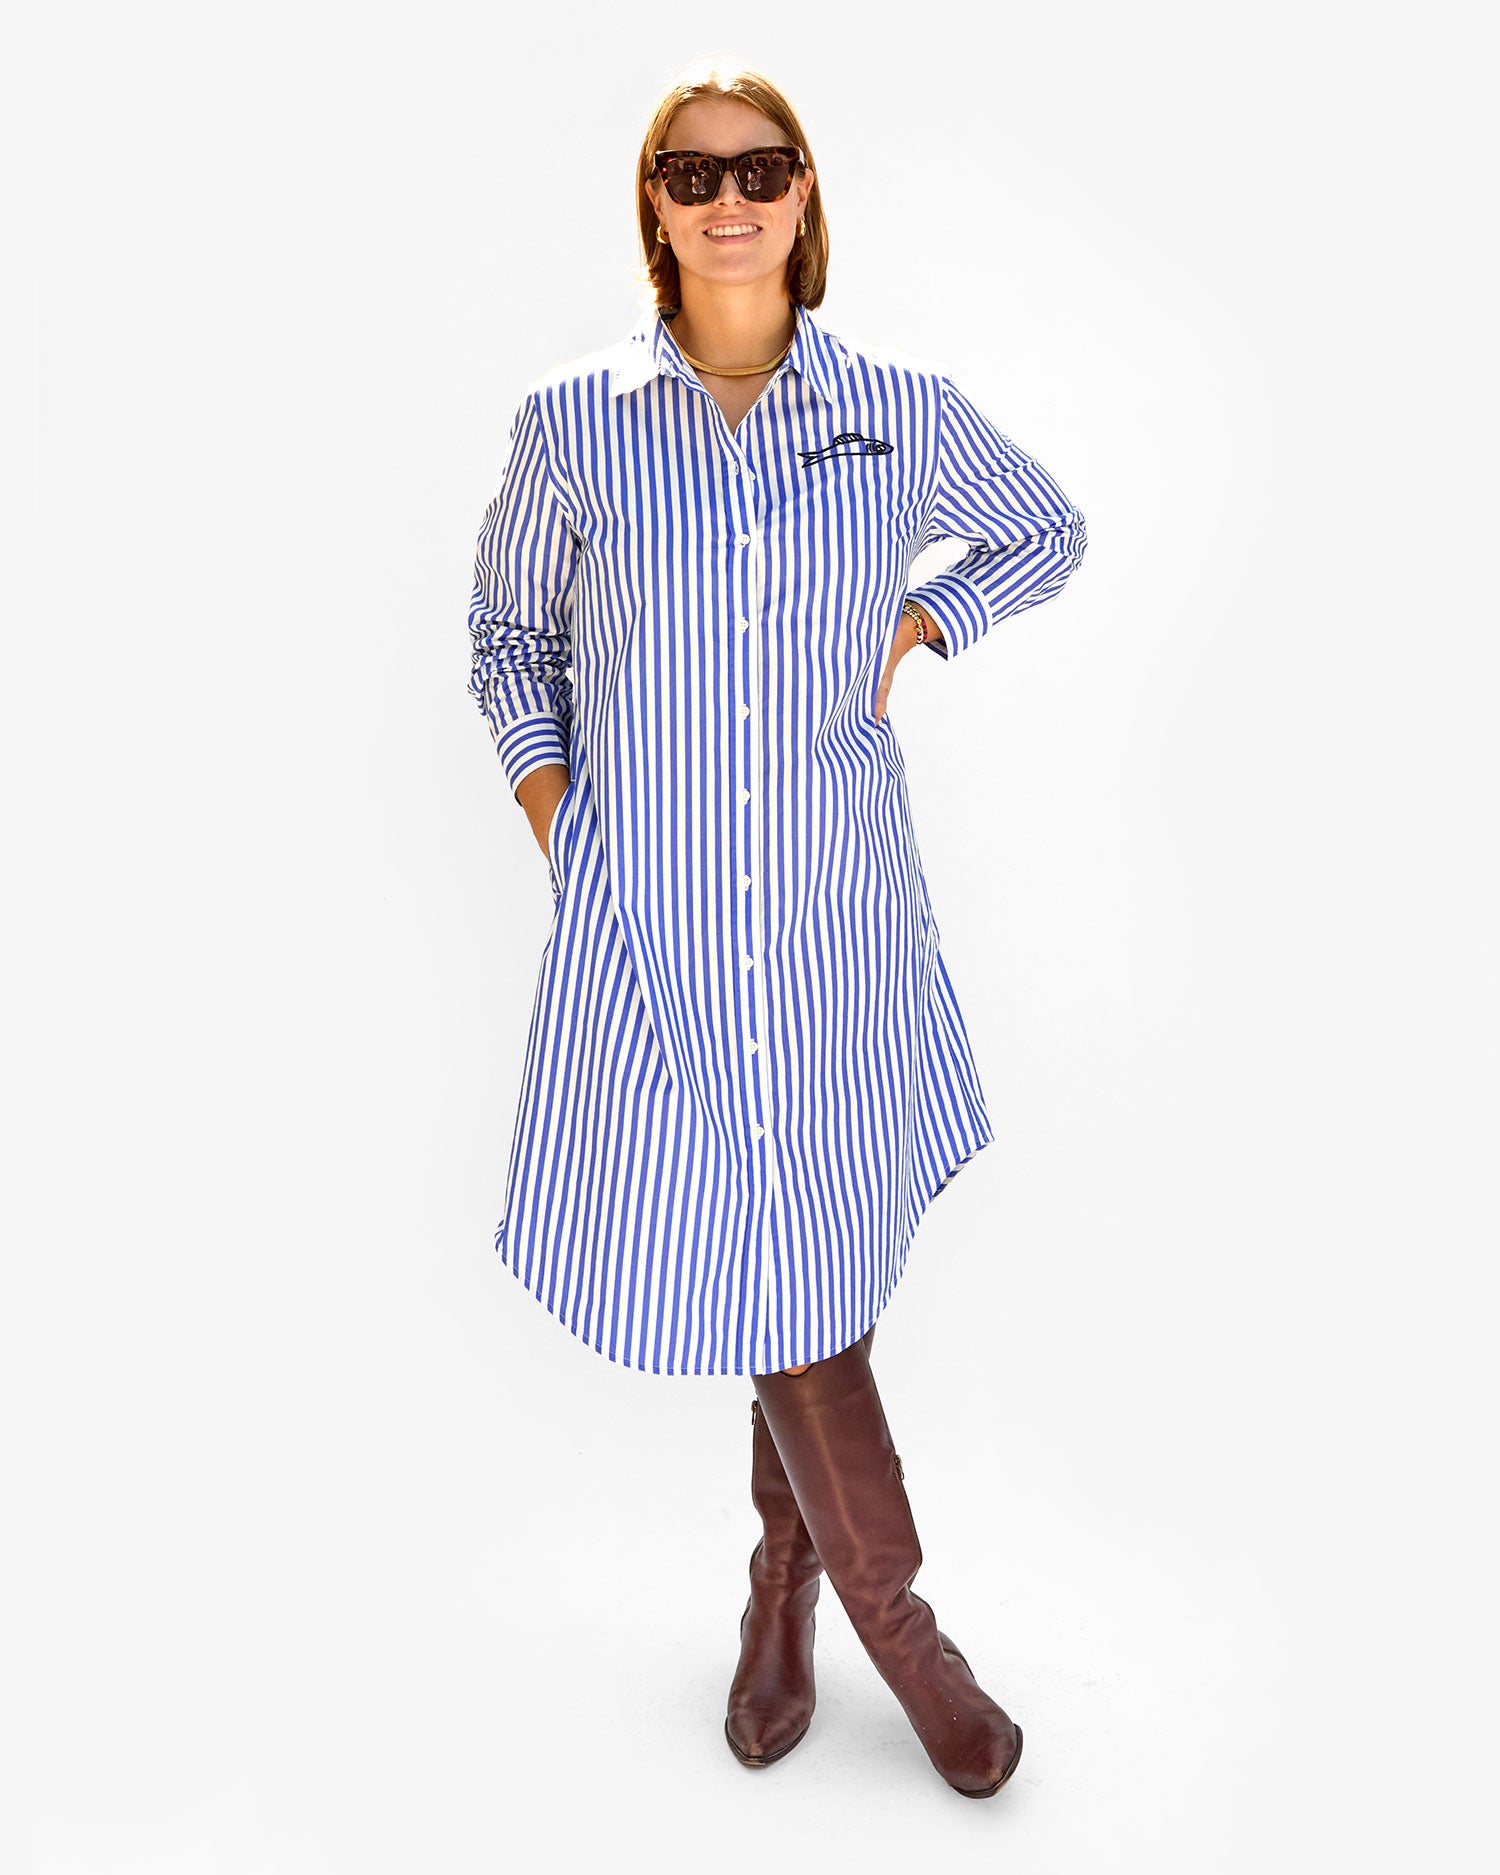 Sonnie wearing the Blue & Cream Stripe w/ Sardine Suzette Dress with tall brown boots